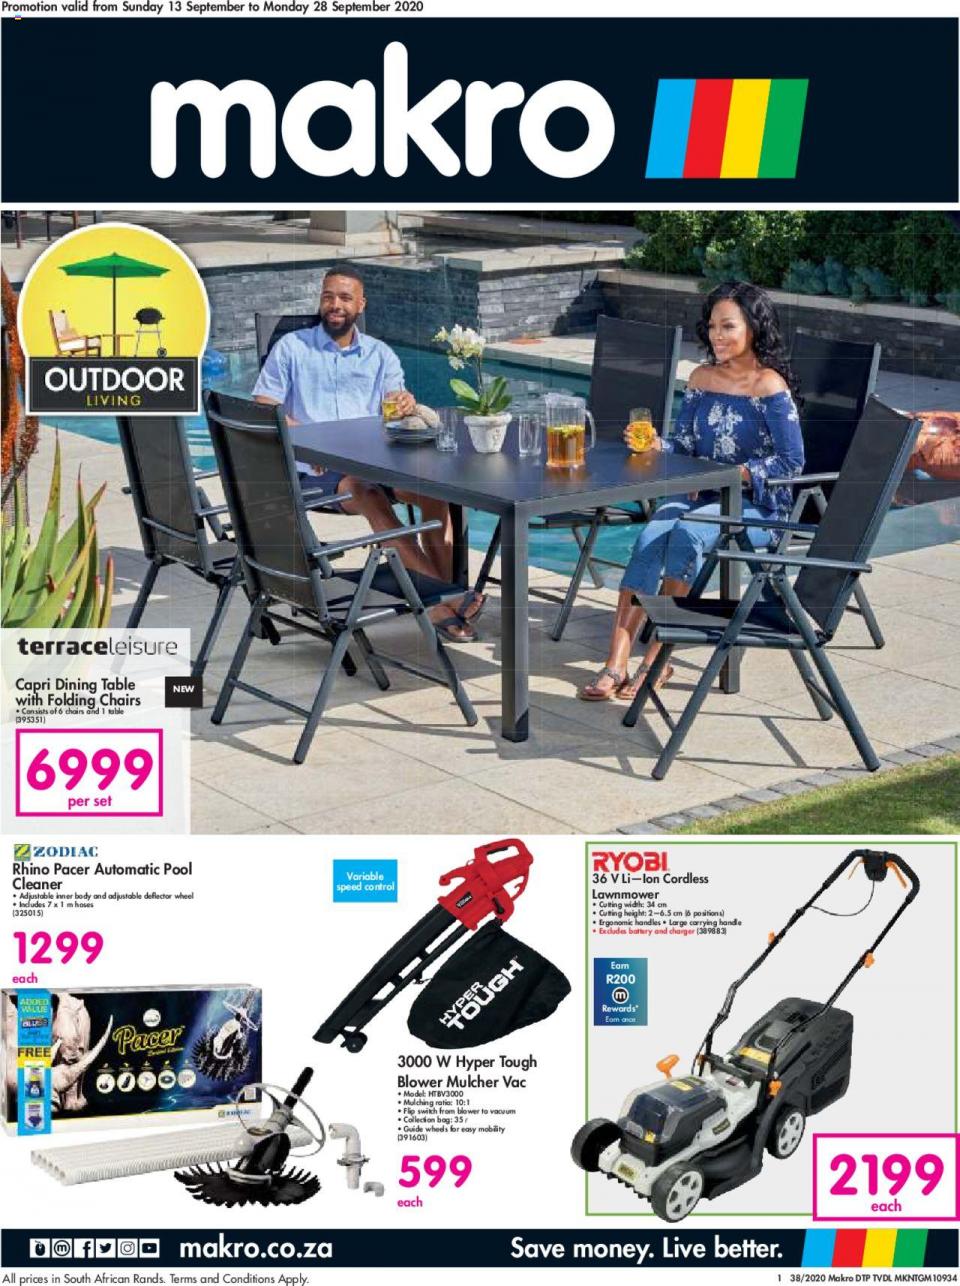 Makro Specials Outdoor Catalogue 13 September 2020